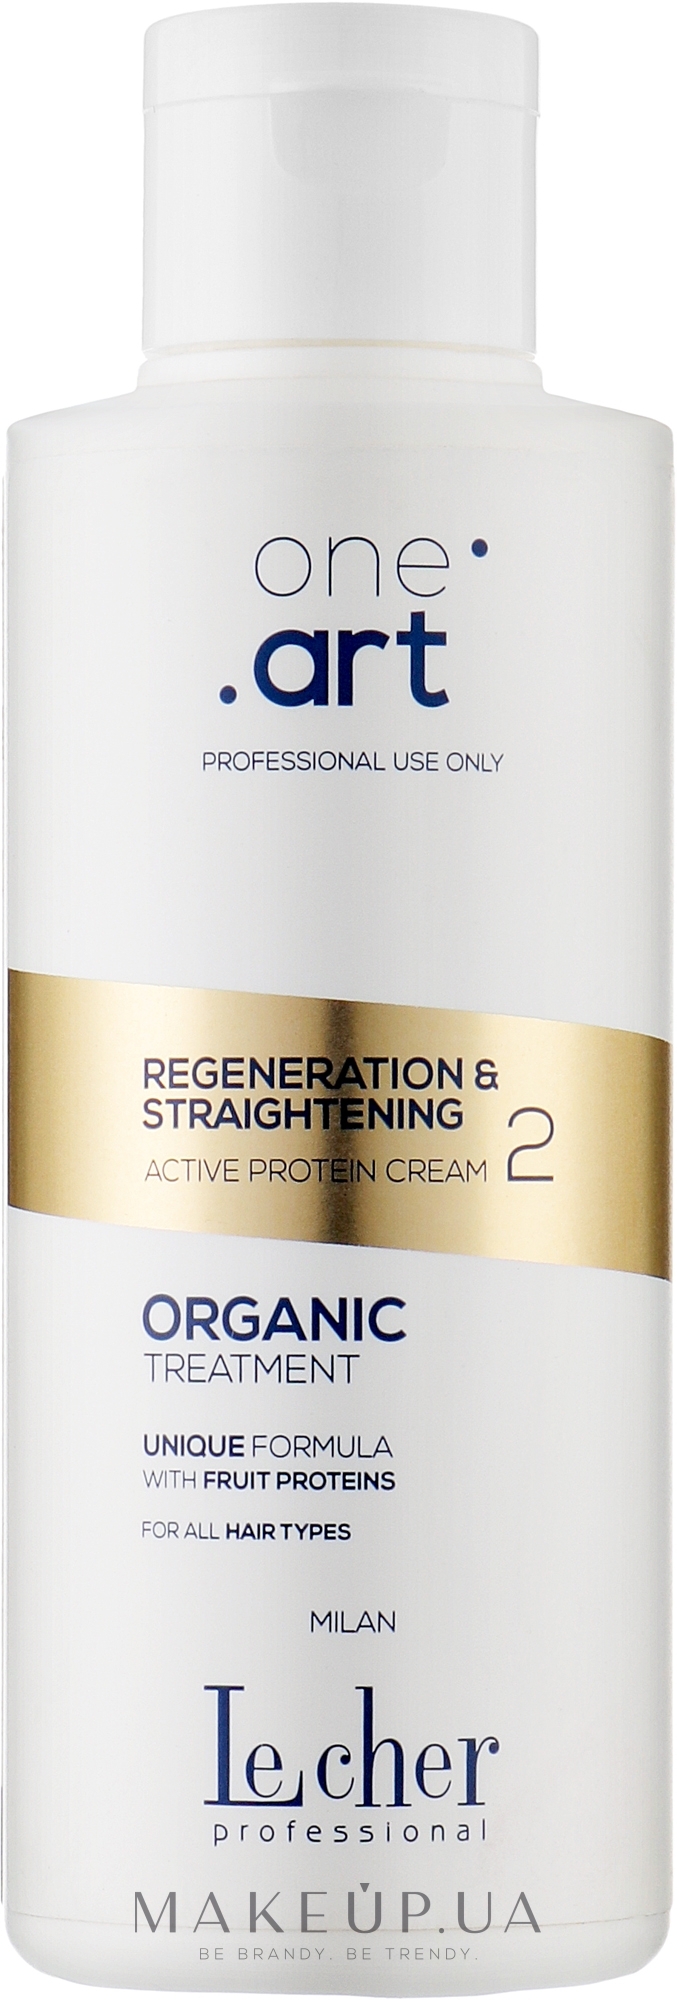 Крем для випрямлення волосся - Le Cher One Art Regeneration & Straightening Active Protein Cream 2 — фото 150ml